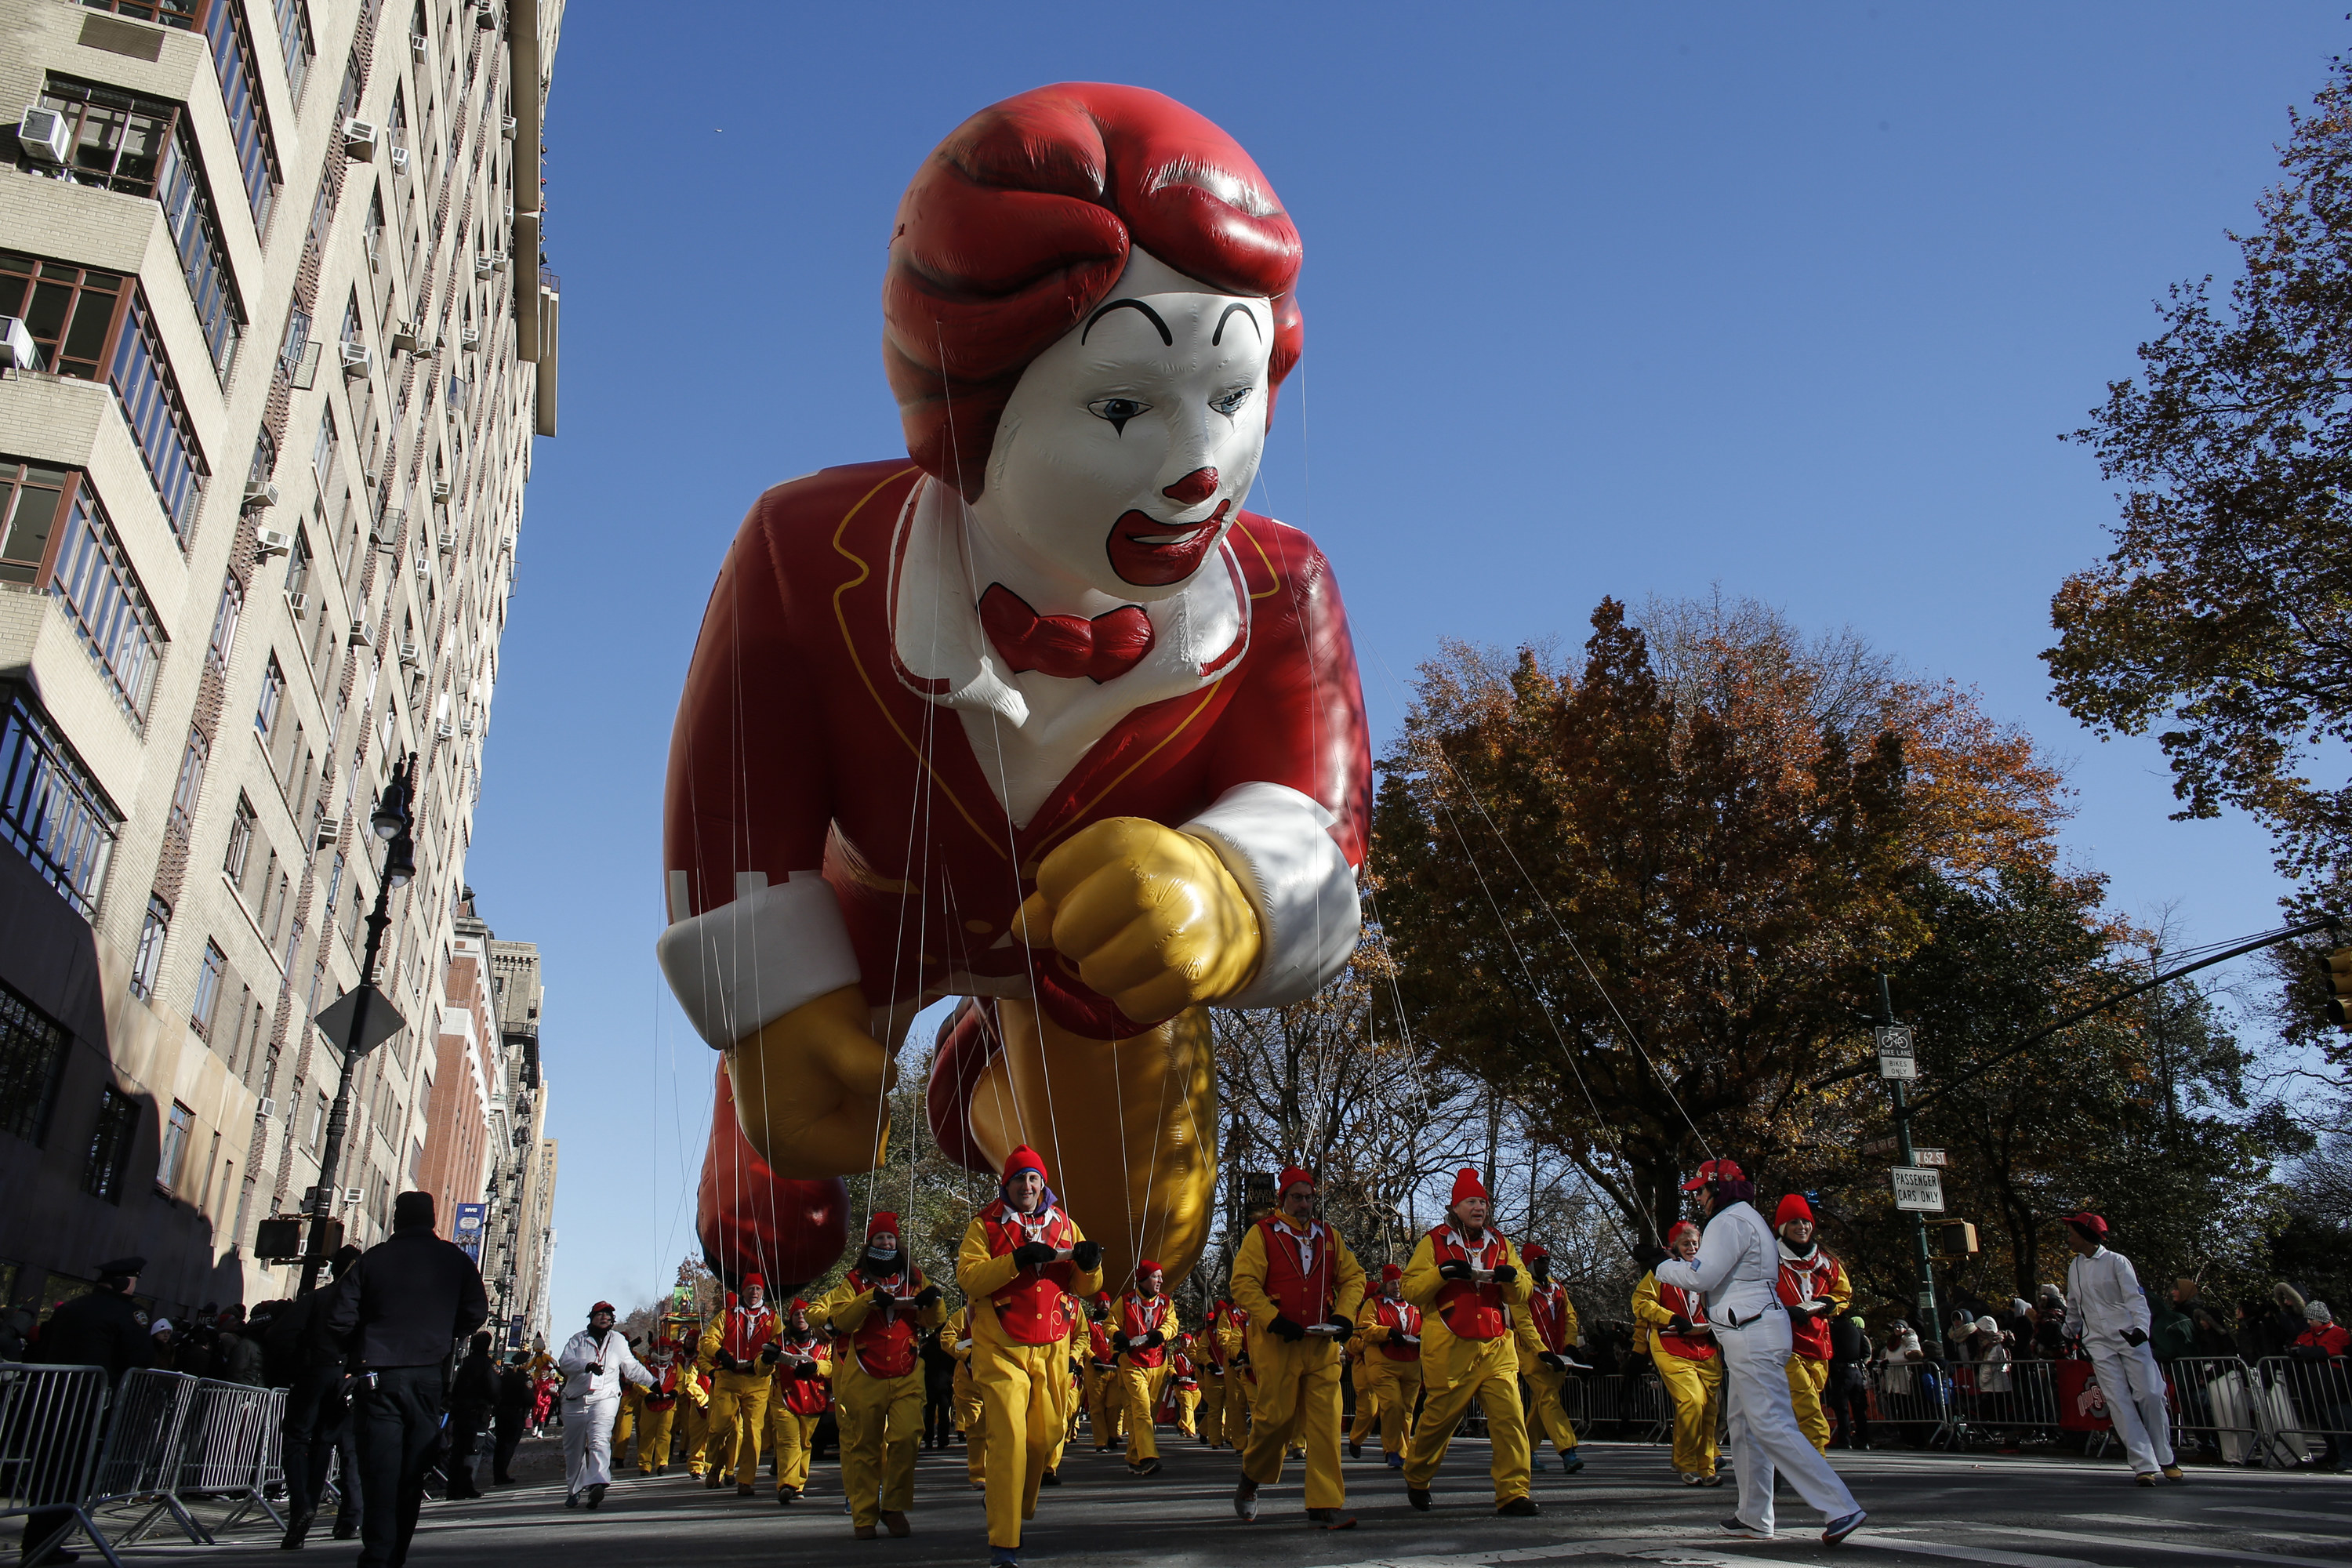 Ronald McDonald balloon